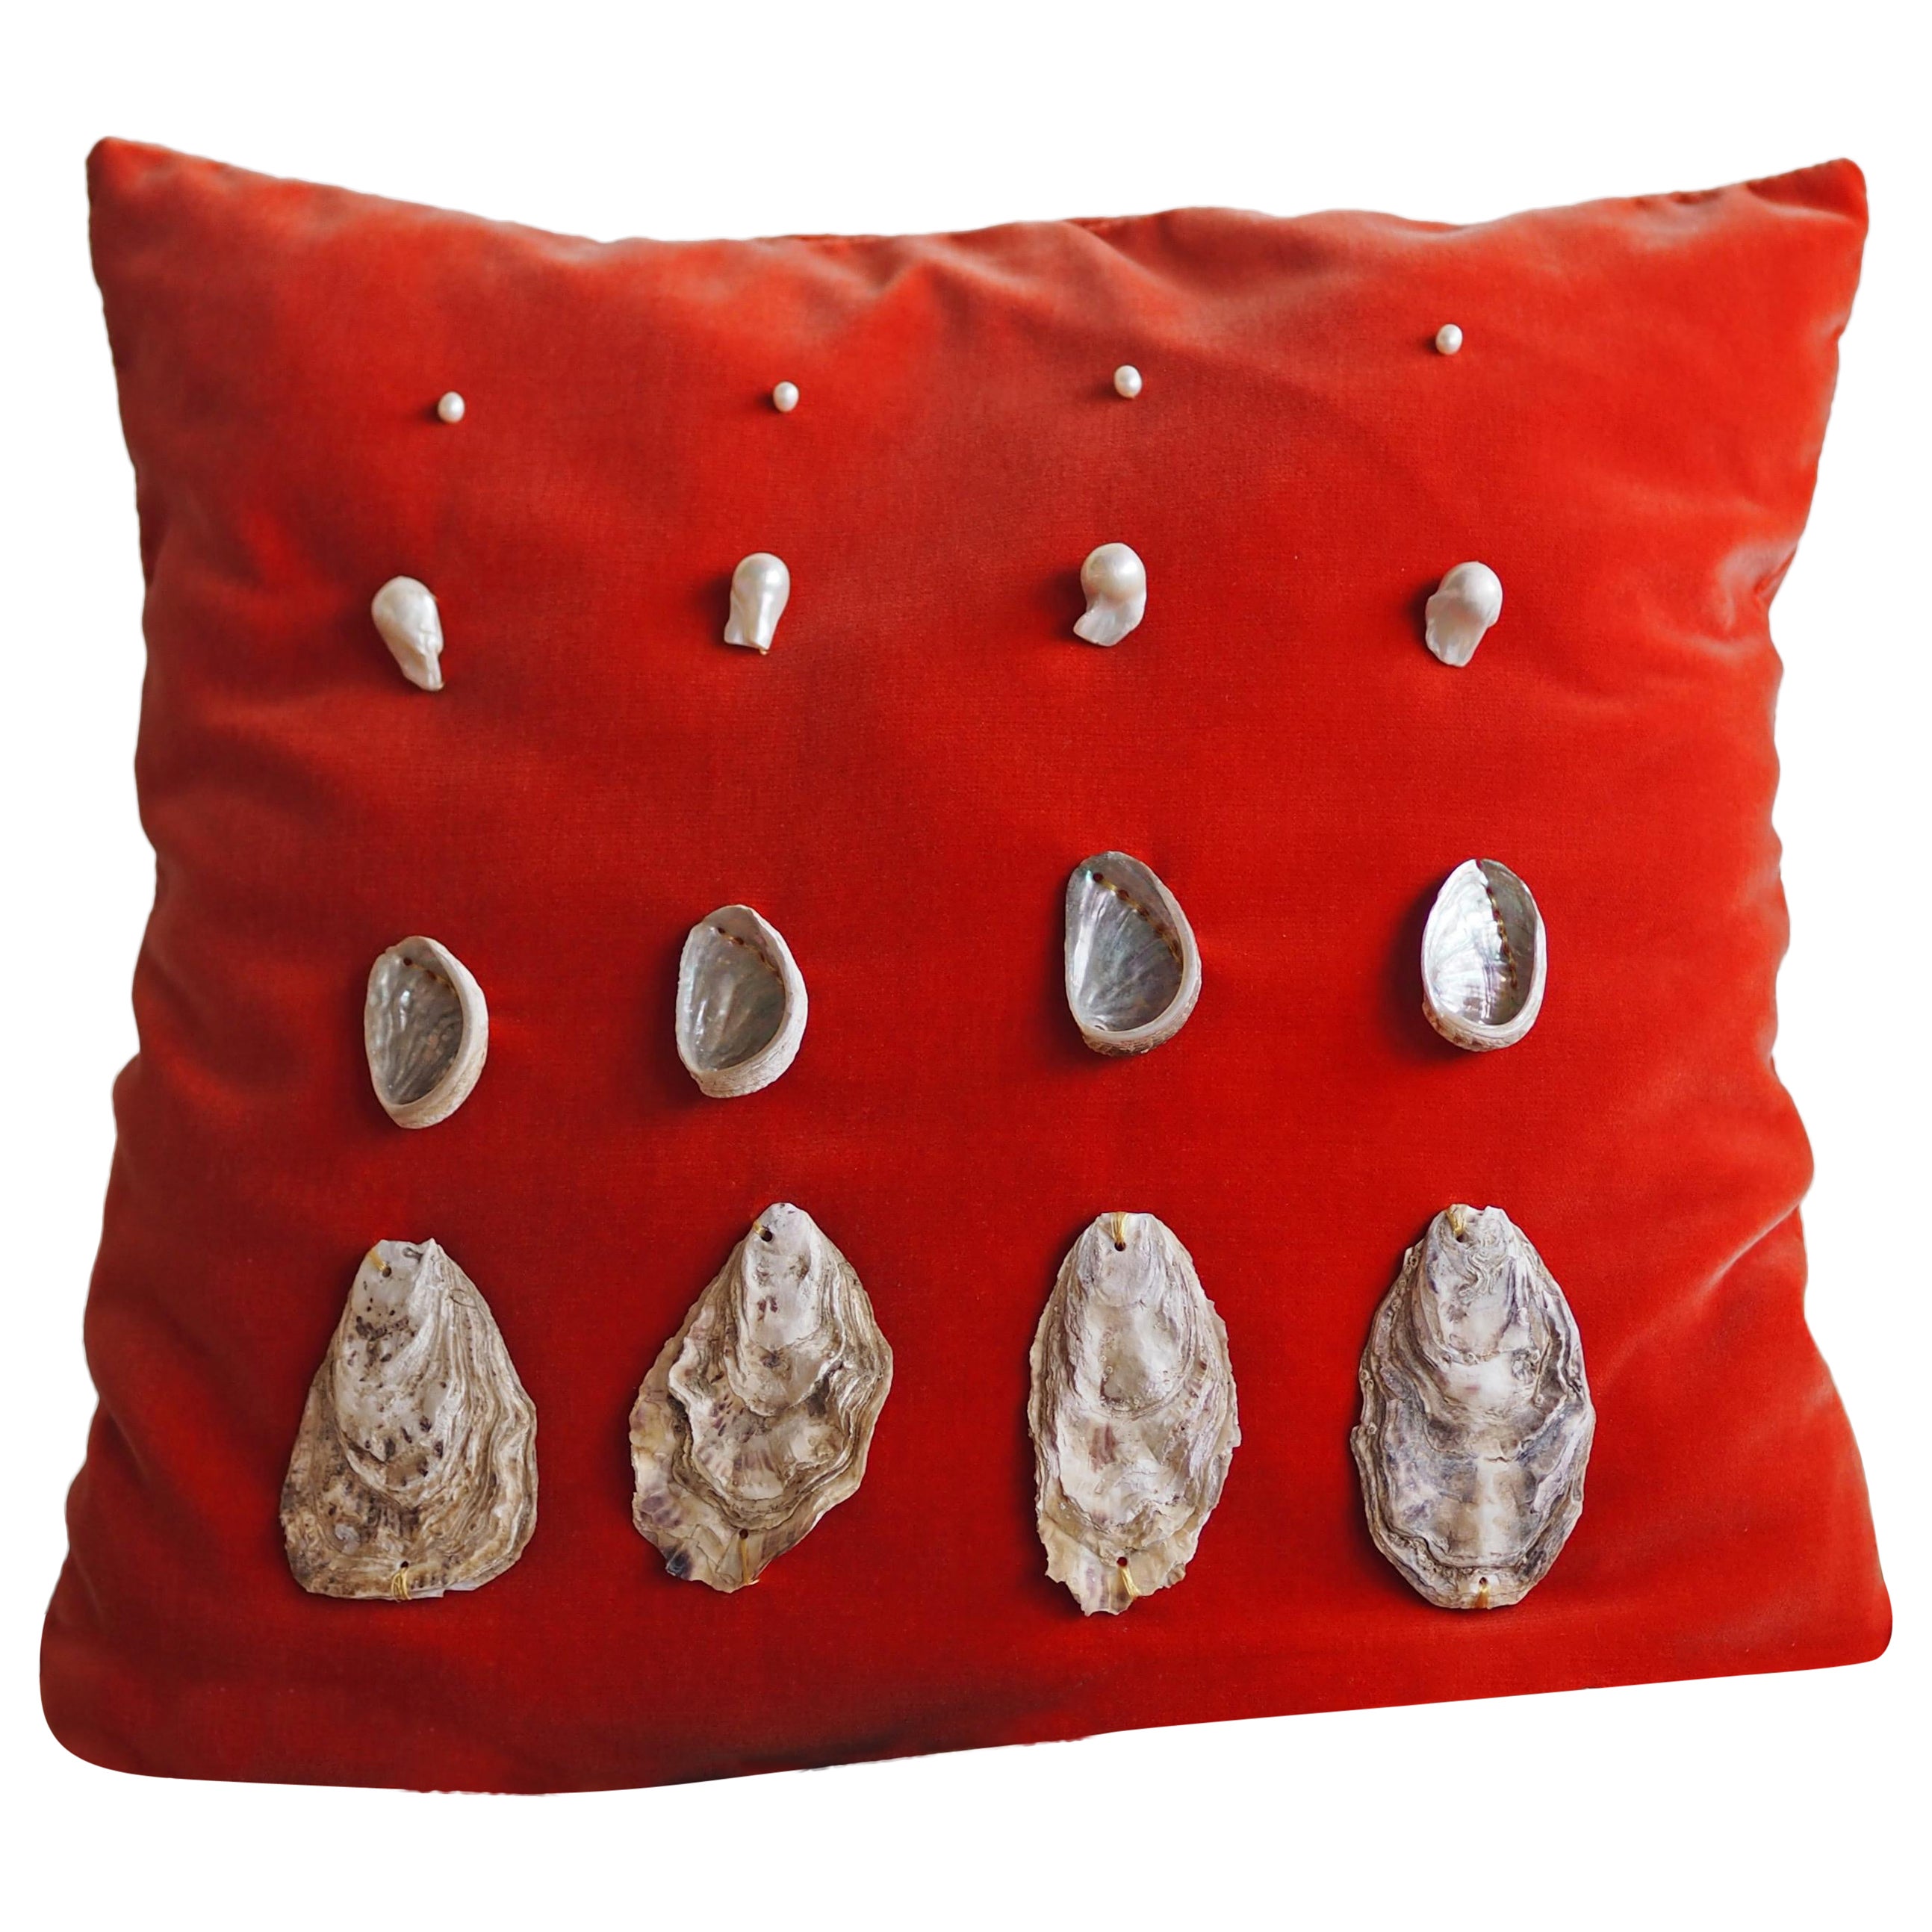 Bon Appetit Cushion by Culto Ponsoda For Sale